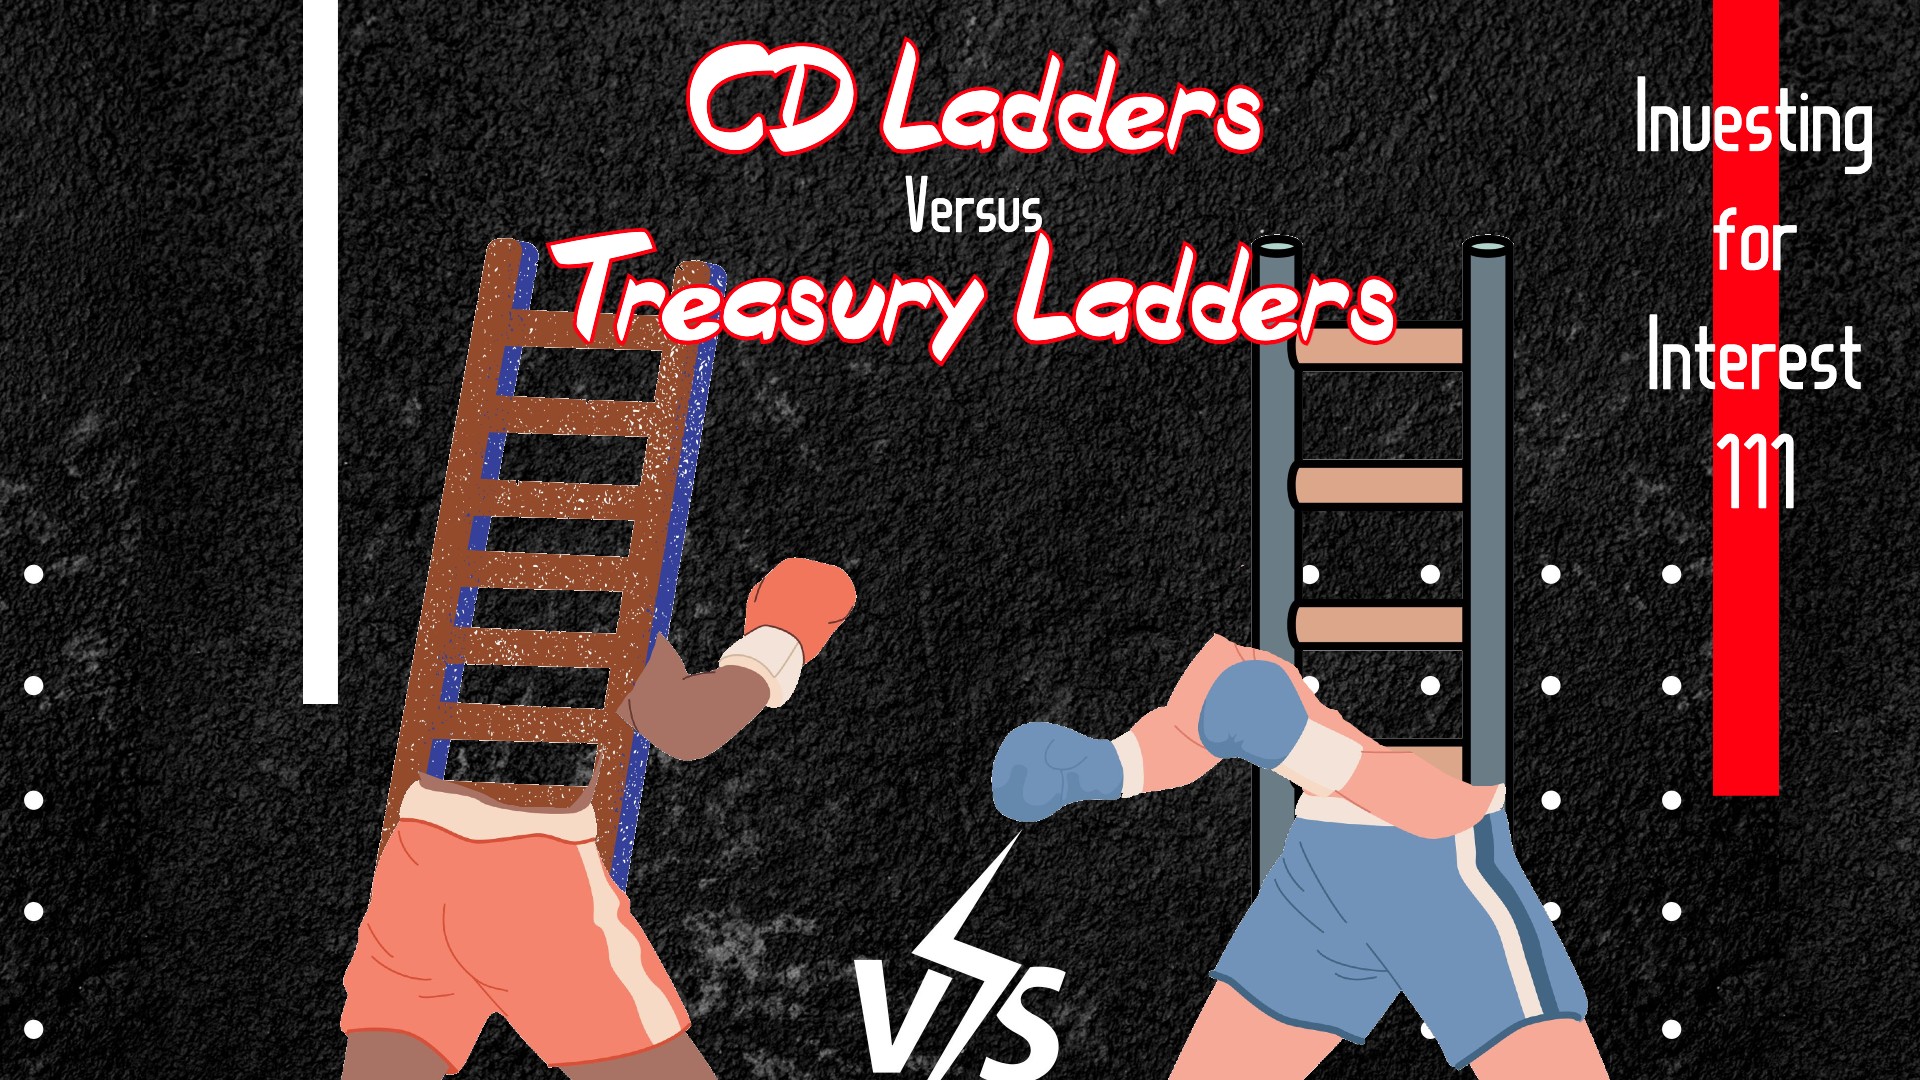 Investing for Interest 111: CD Ladders vs. Treasury Ladders